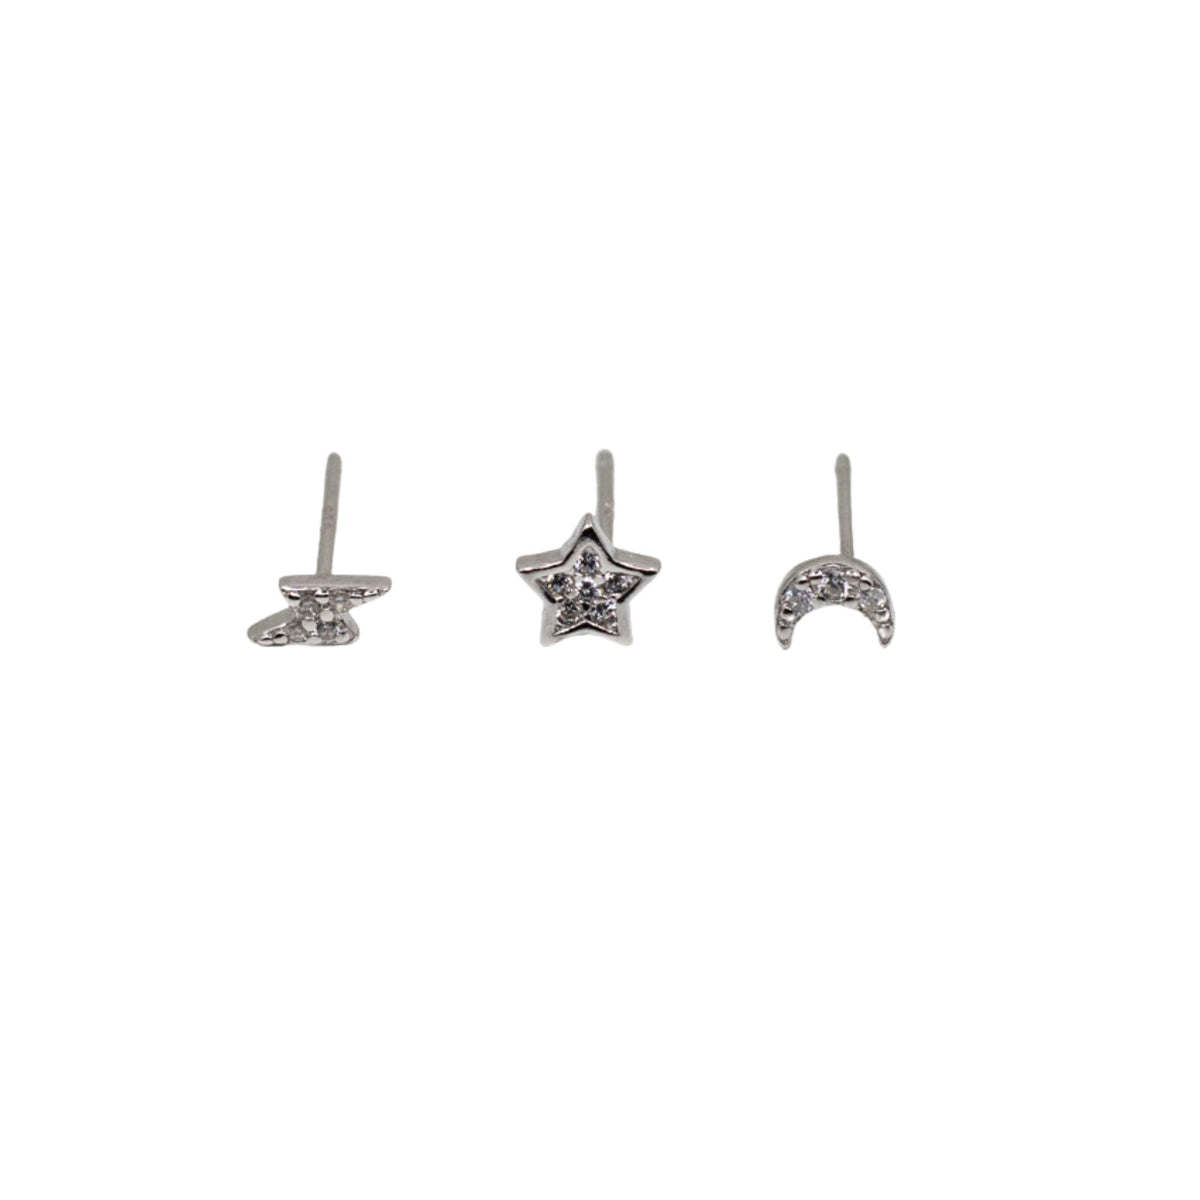 Silver Studs Celestial Earring Set - Set of 3 The Curated LobeGold Celestial Stud EarringsGold Crescent Moon StudsGold Lightning Studs